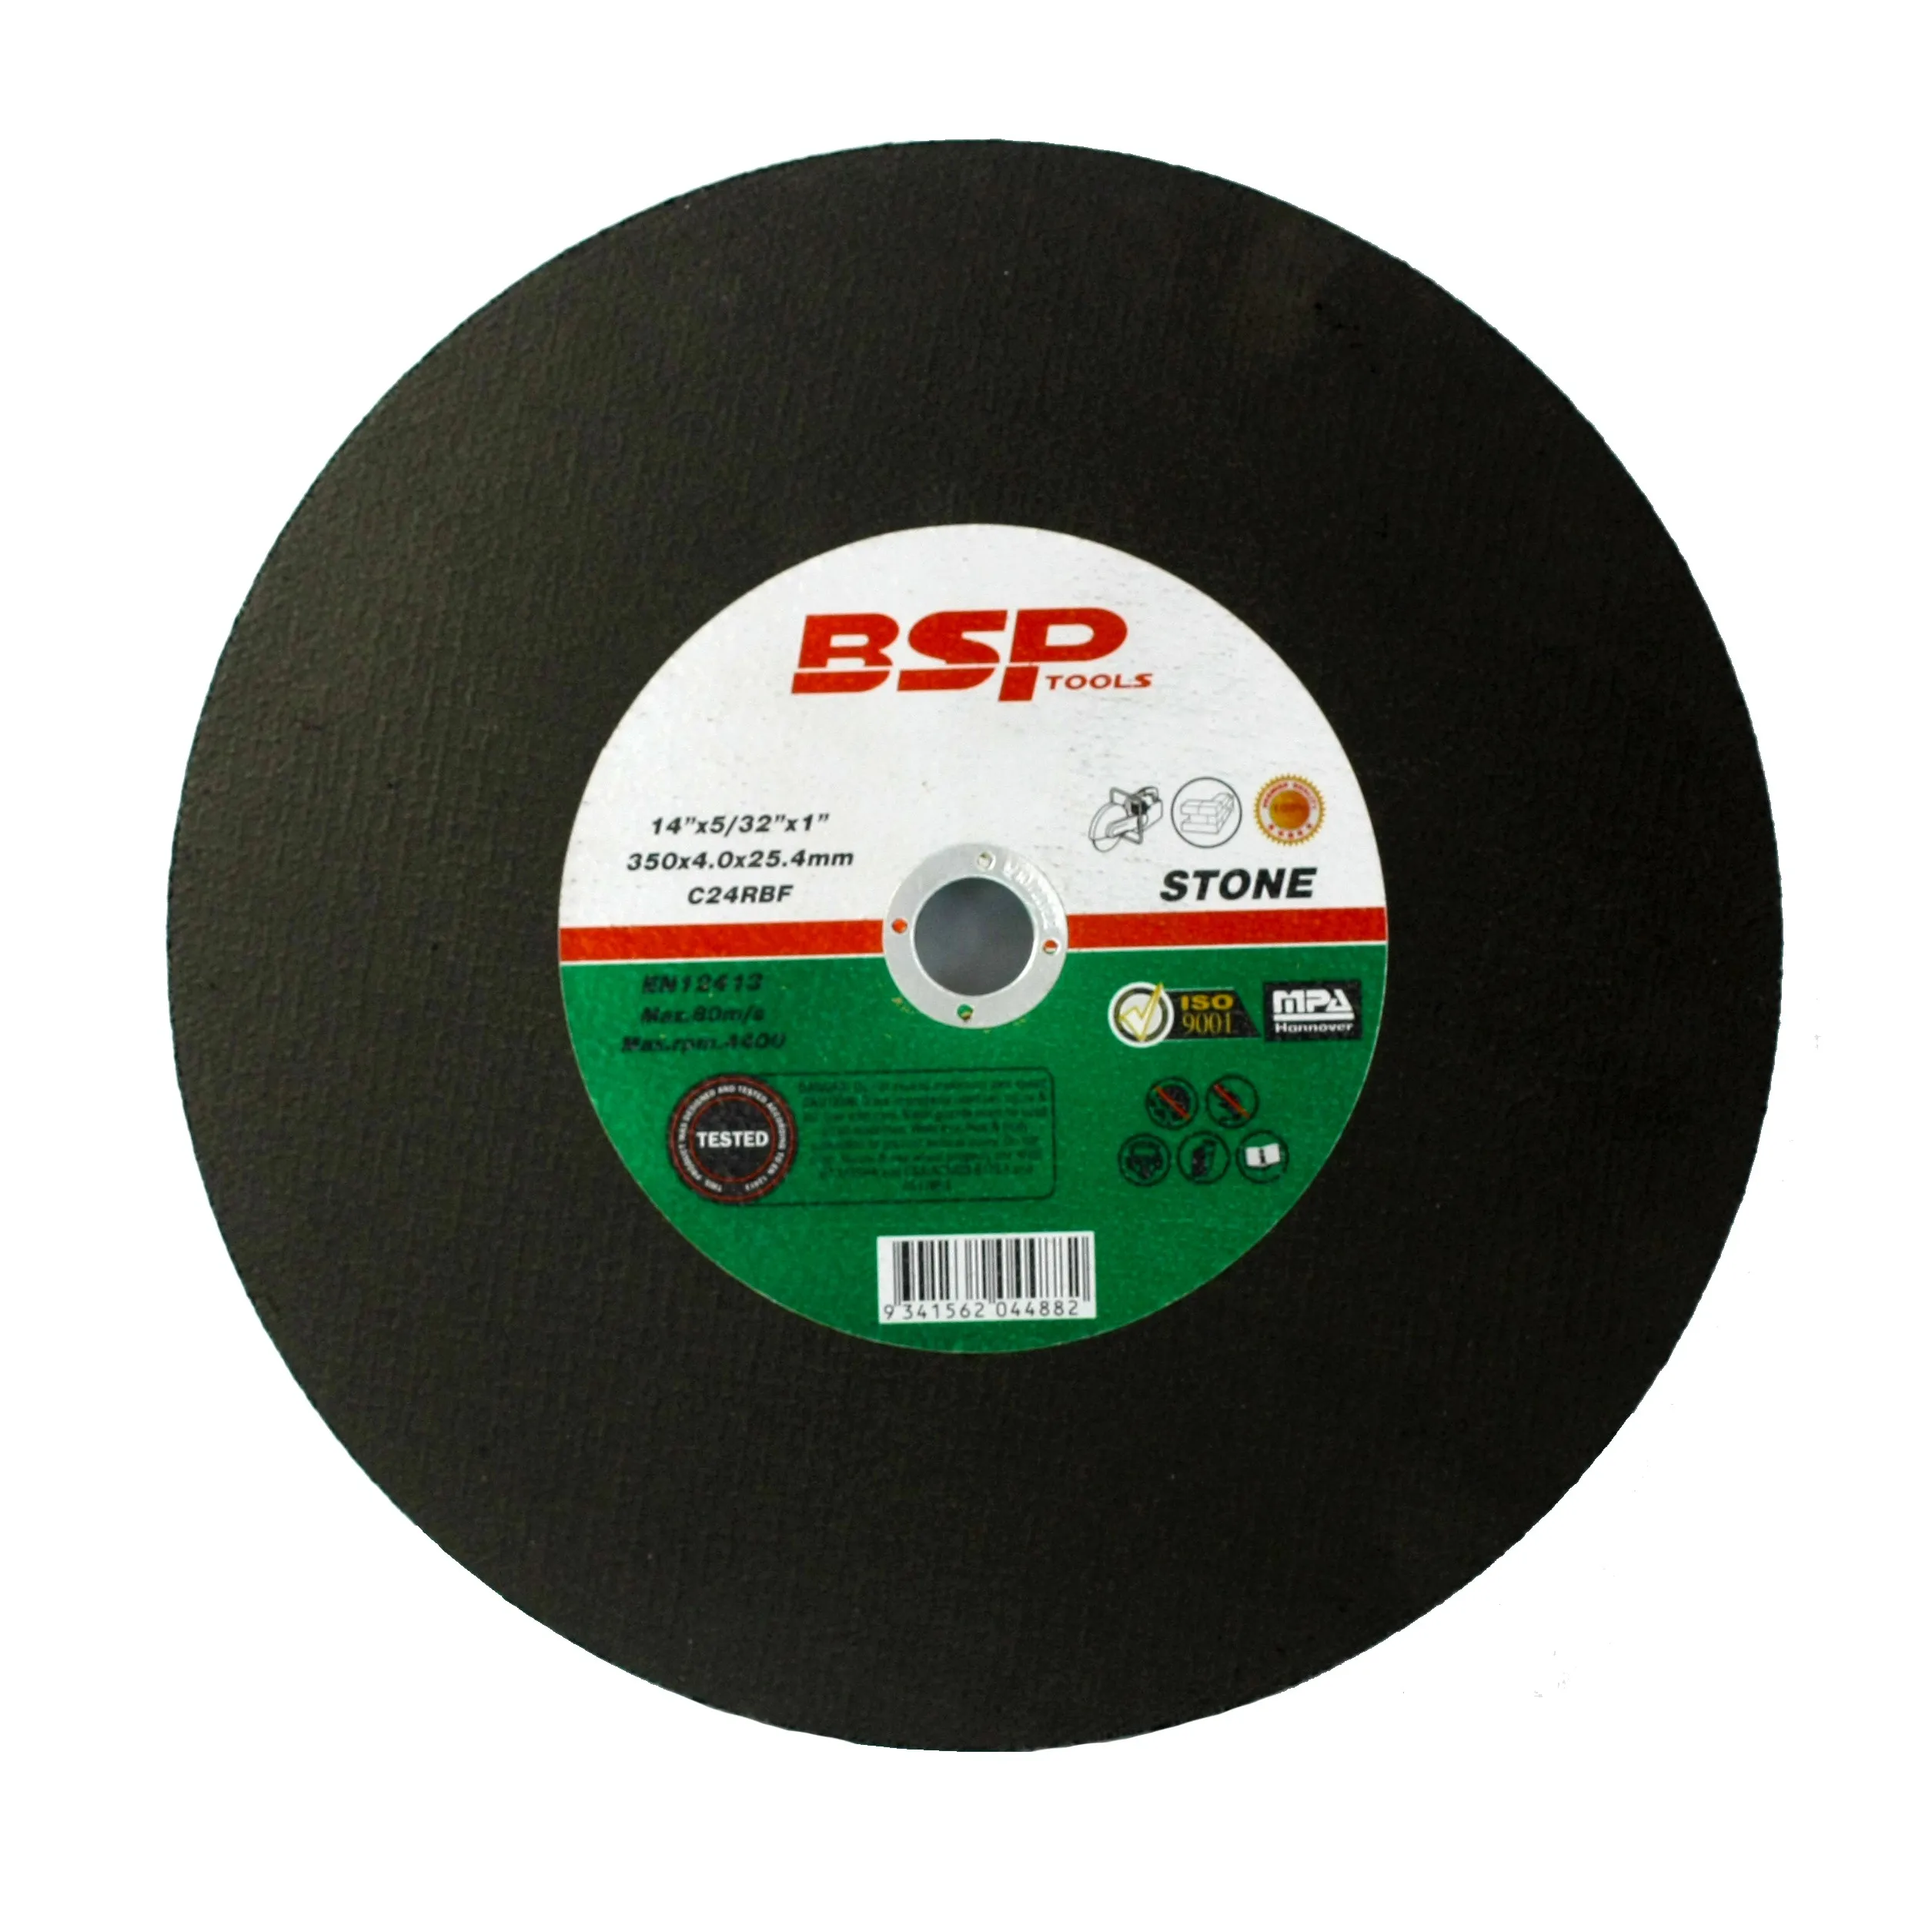 Professional Metal Cutting Chop Saw Discs 5 Discs 14" Klingspor 350mm 